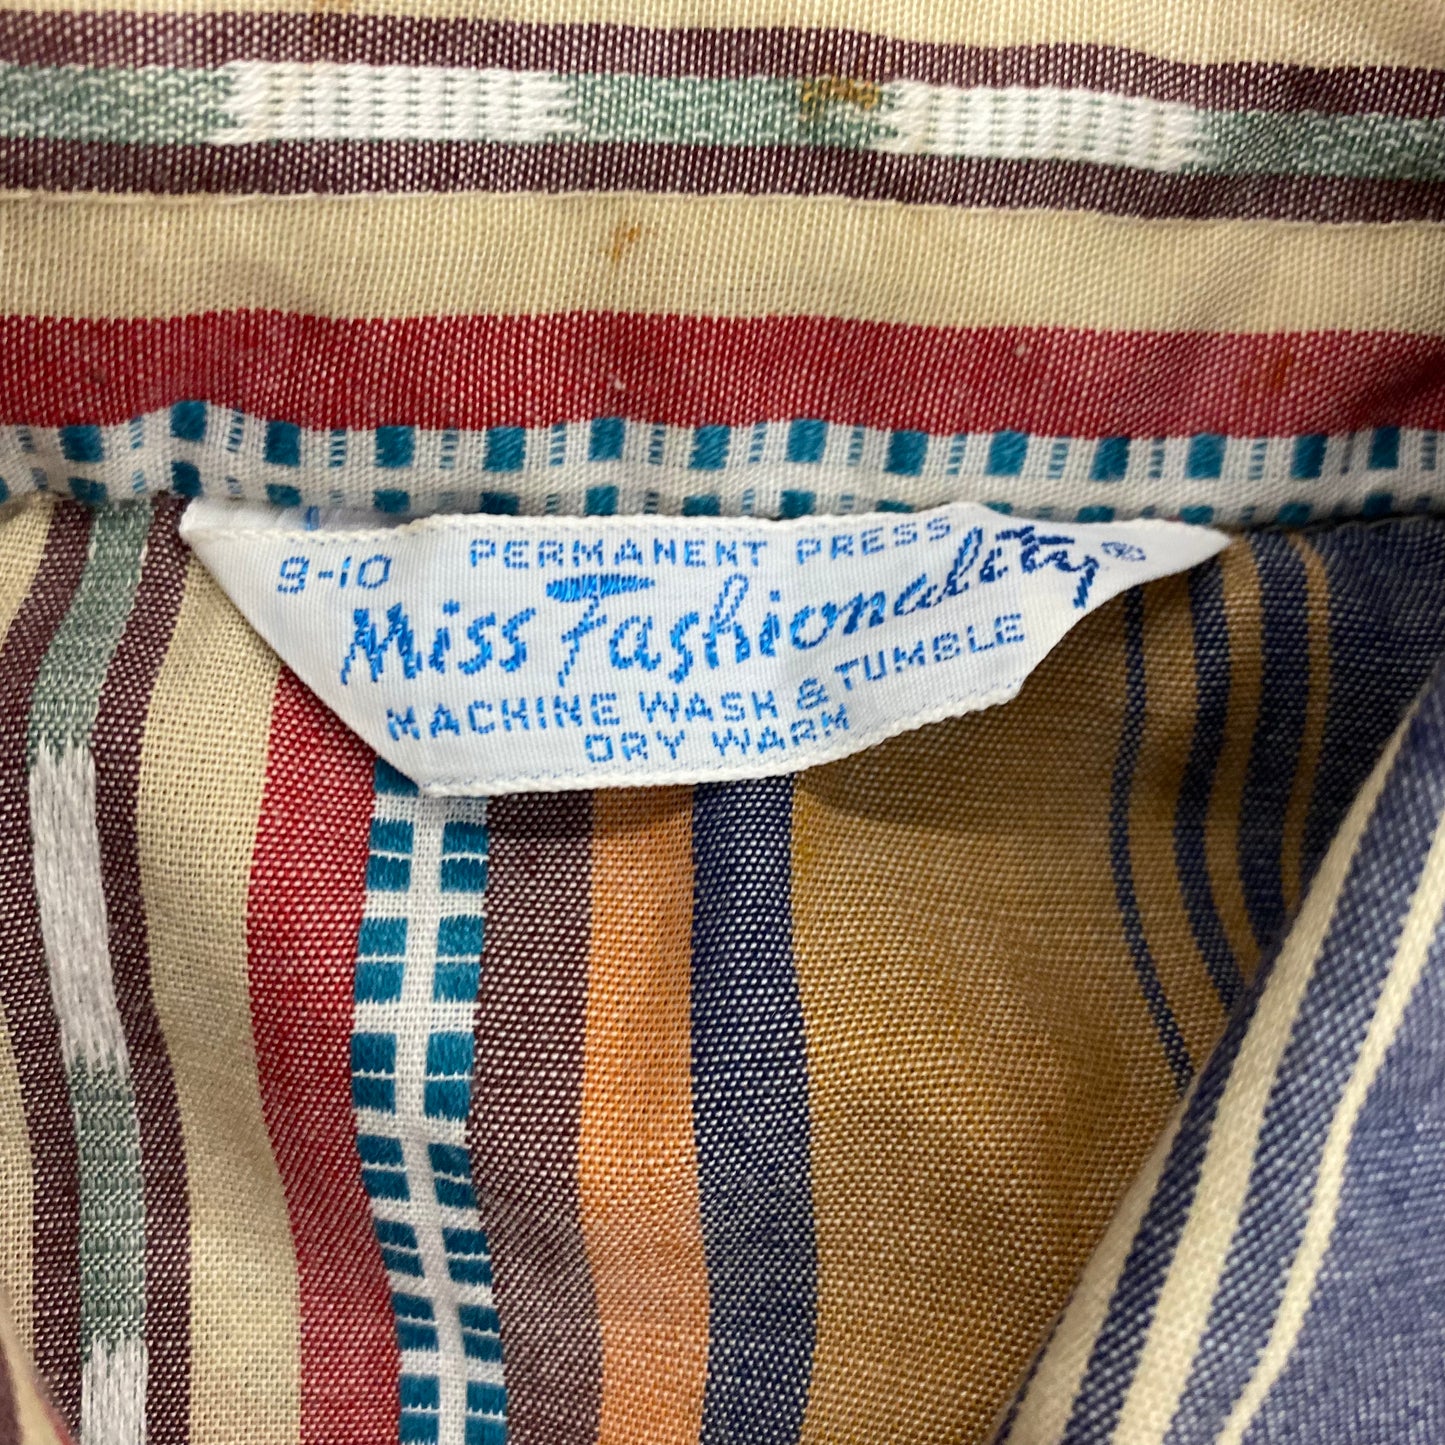 Vintage Miss Fashionality Striped Western Shirt - Size 9/10